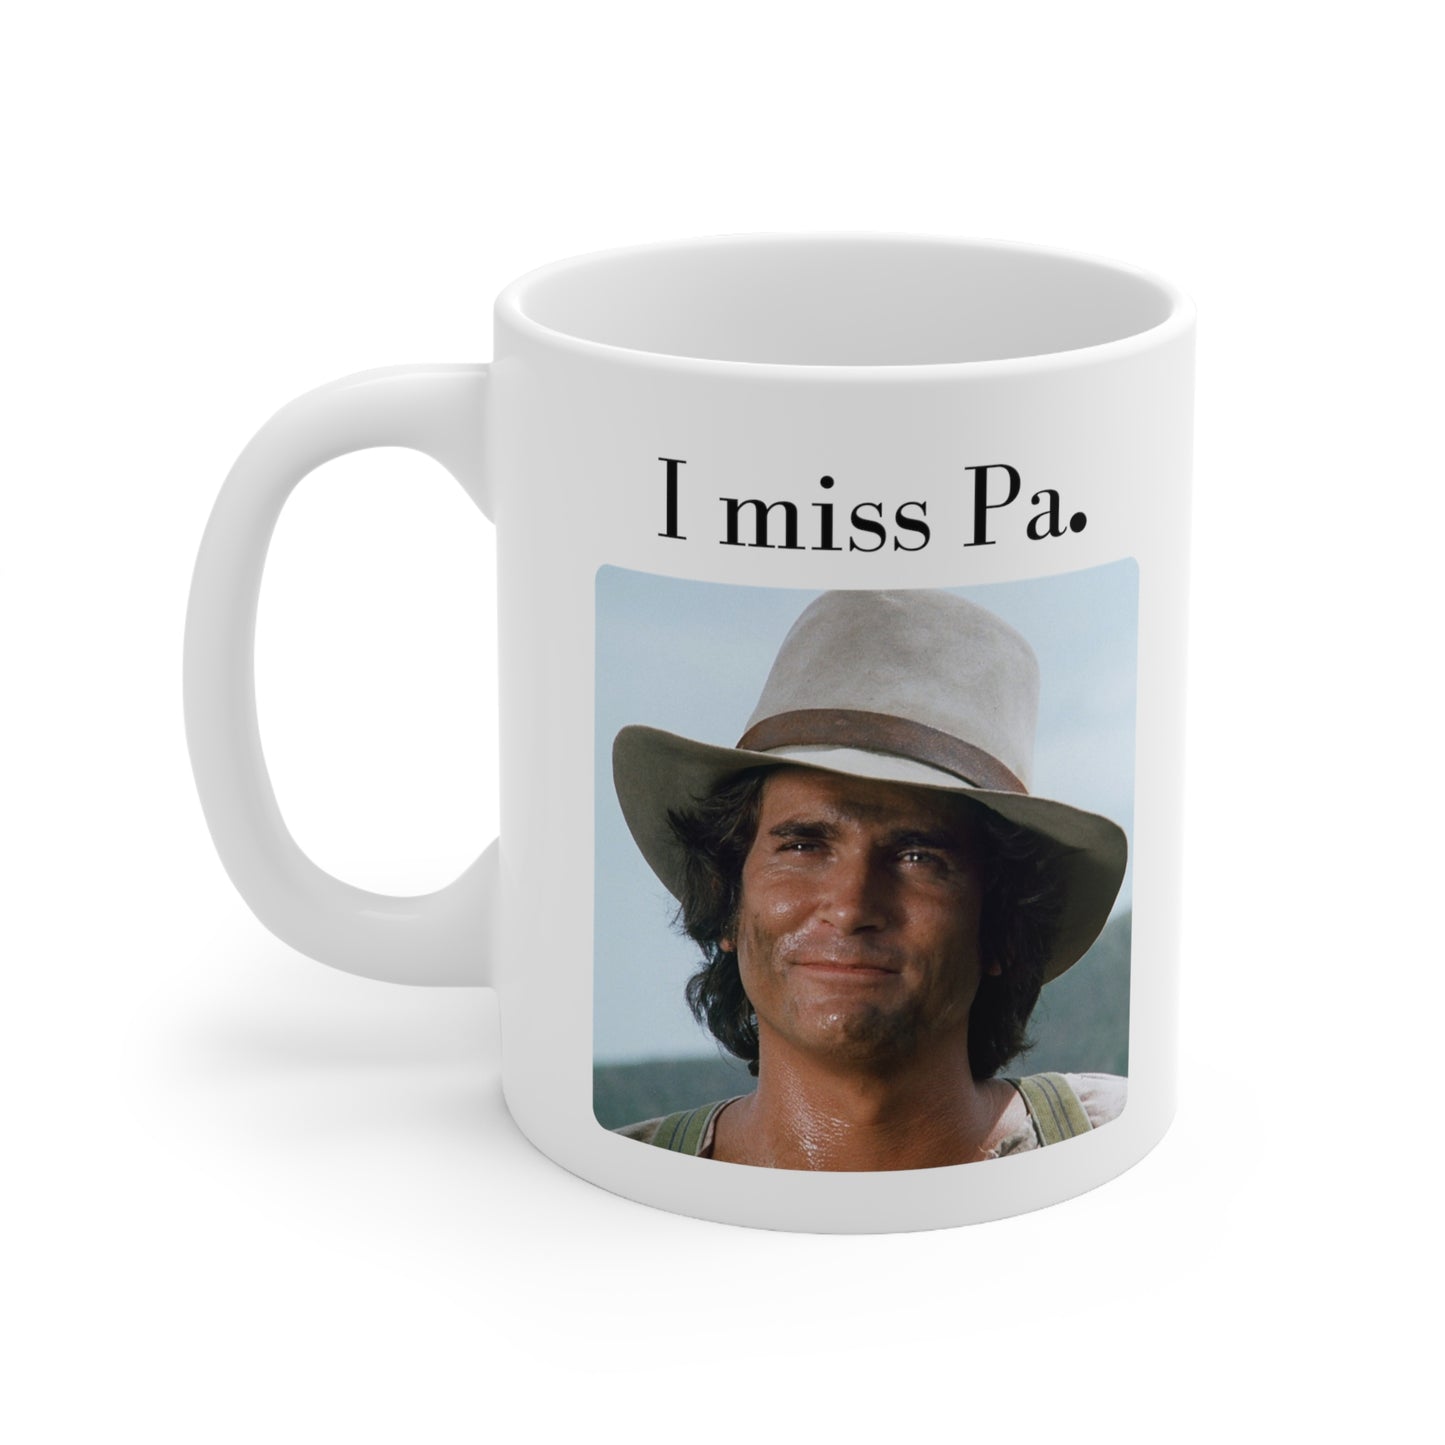 I miss Pa..(Michael Landon) (Little House on the Prairie) Ceramic Mug 11oz RARE PHOTO